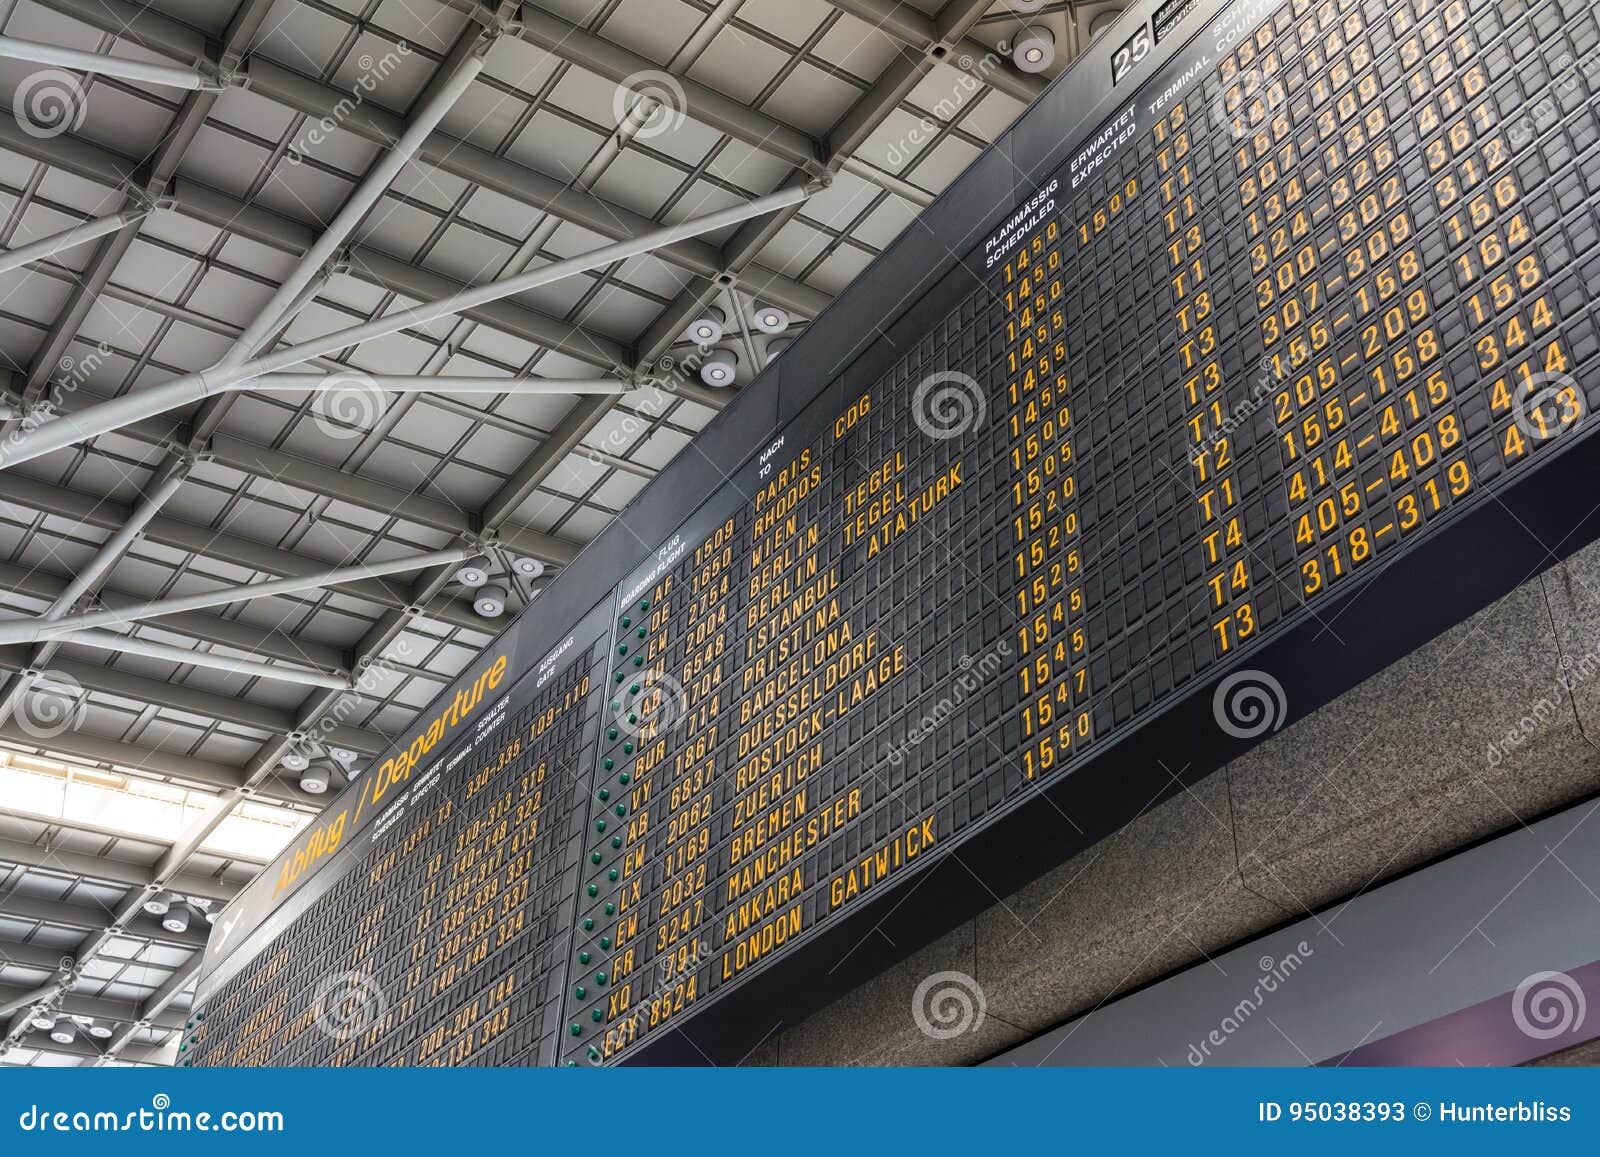 german airport abflug departures timetable schedule sign information